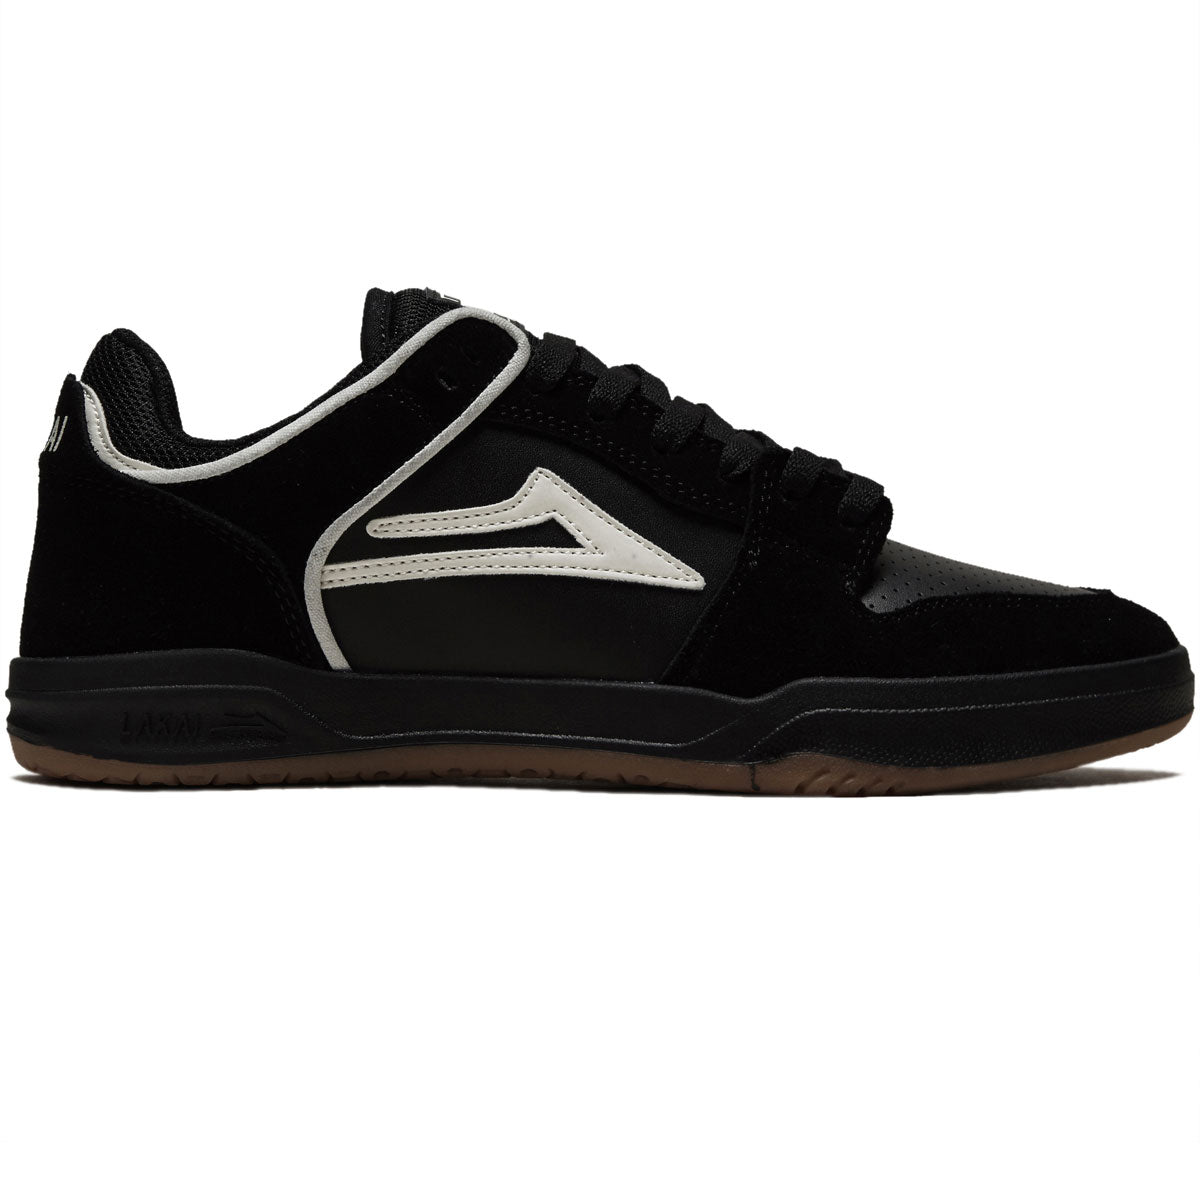 Lakai Telford Low Shoes - Black/Glow Suede image 1